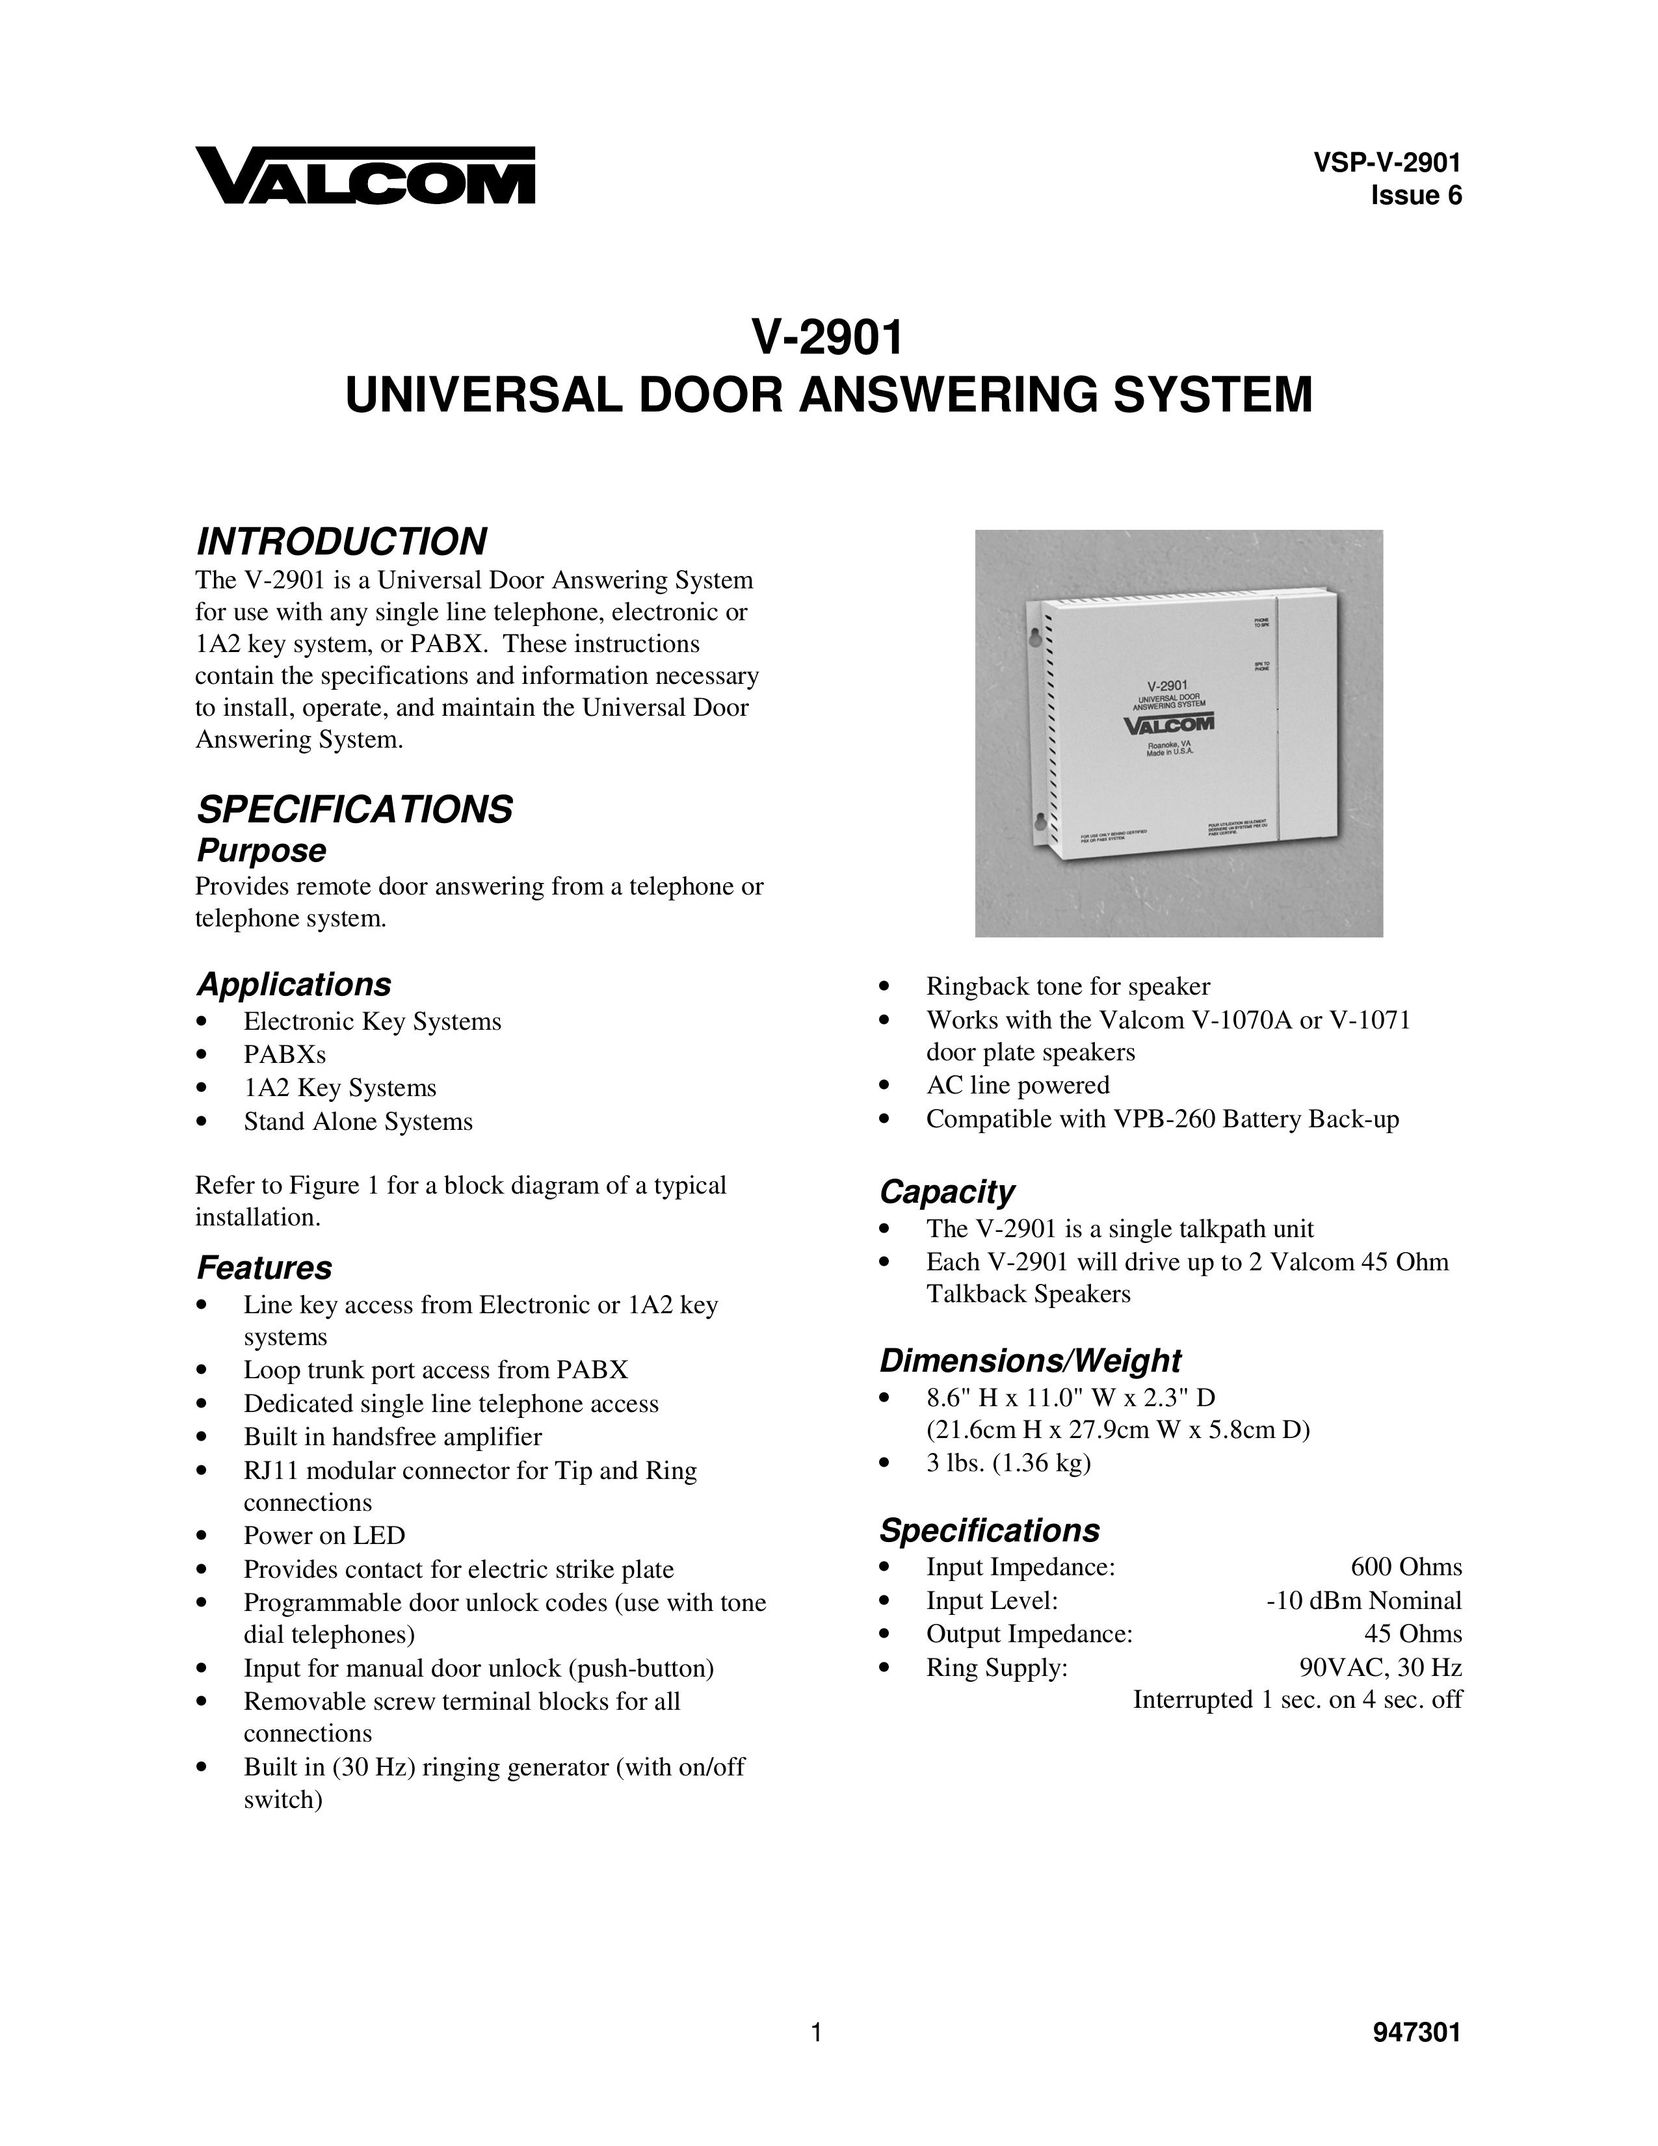 Valcom V-2901 Answering Machine User Manual